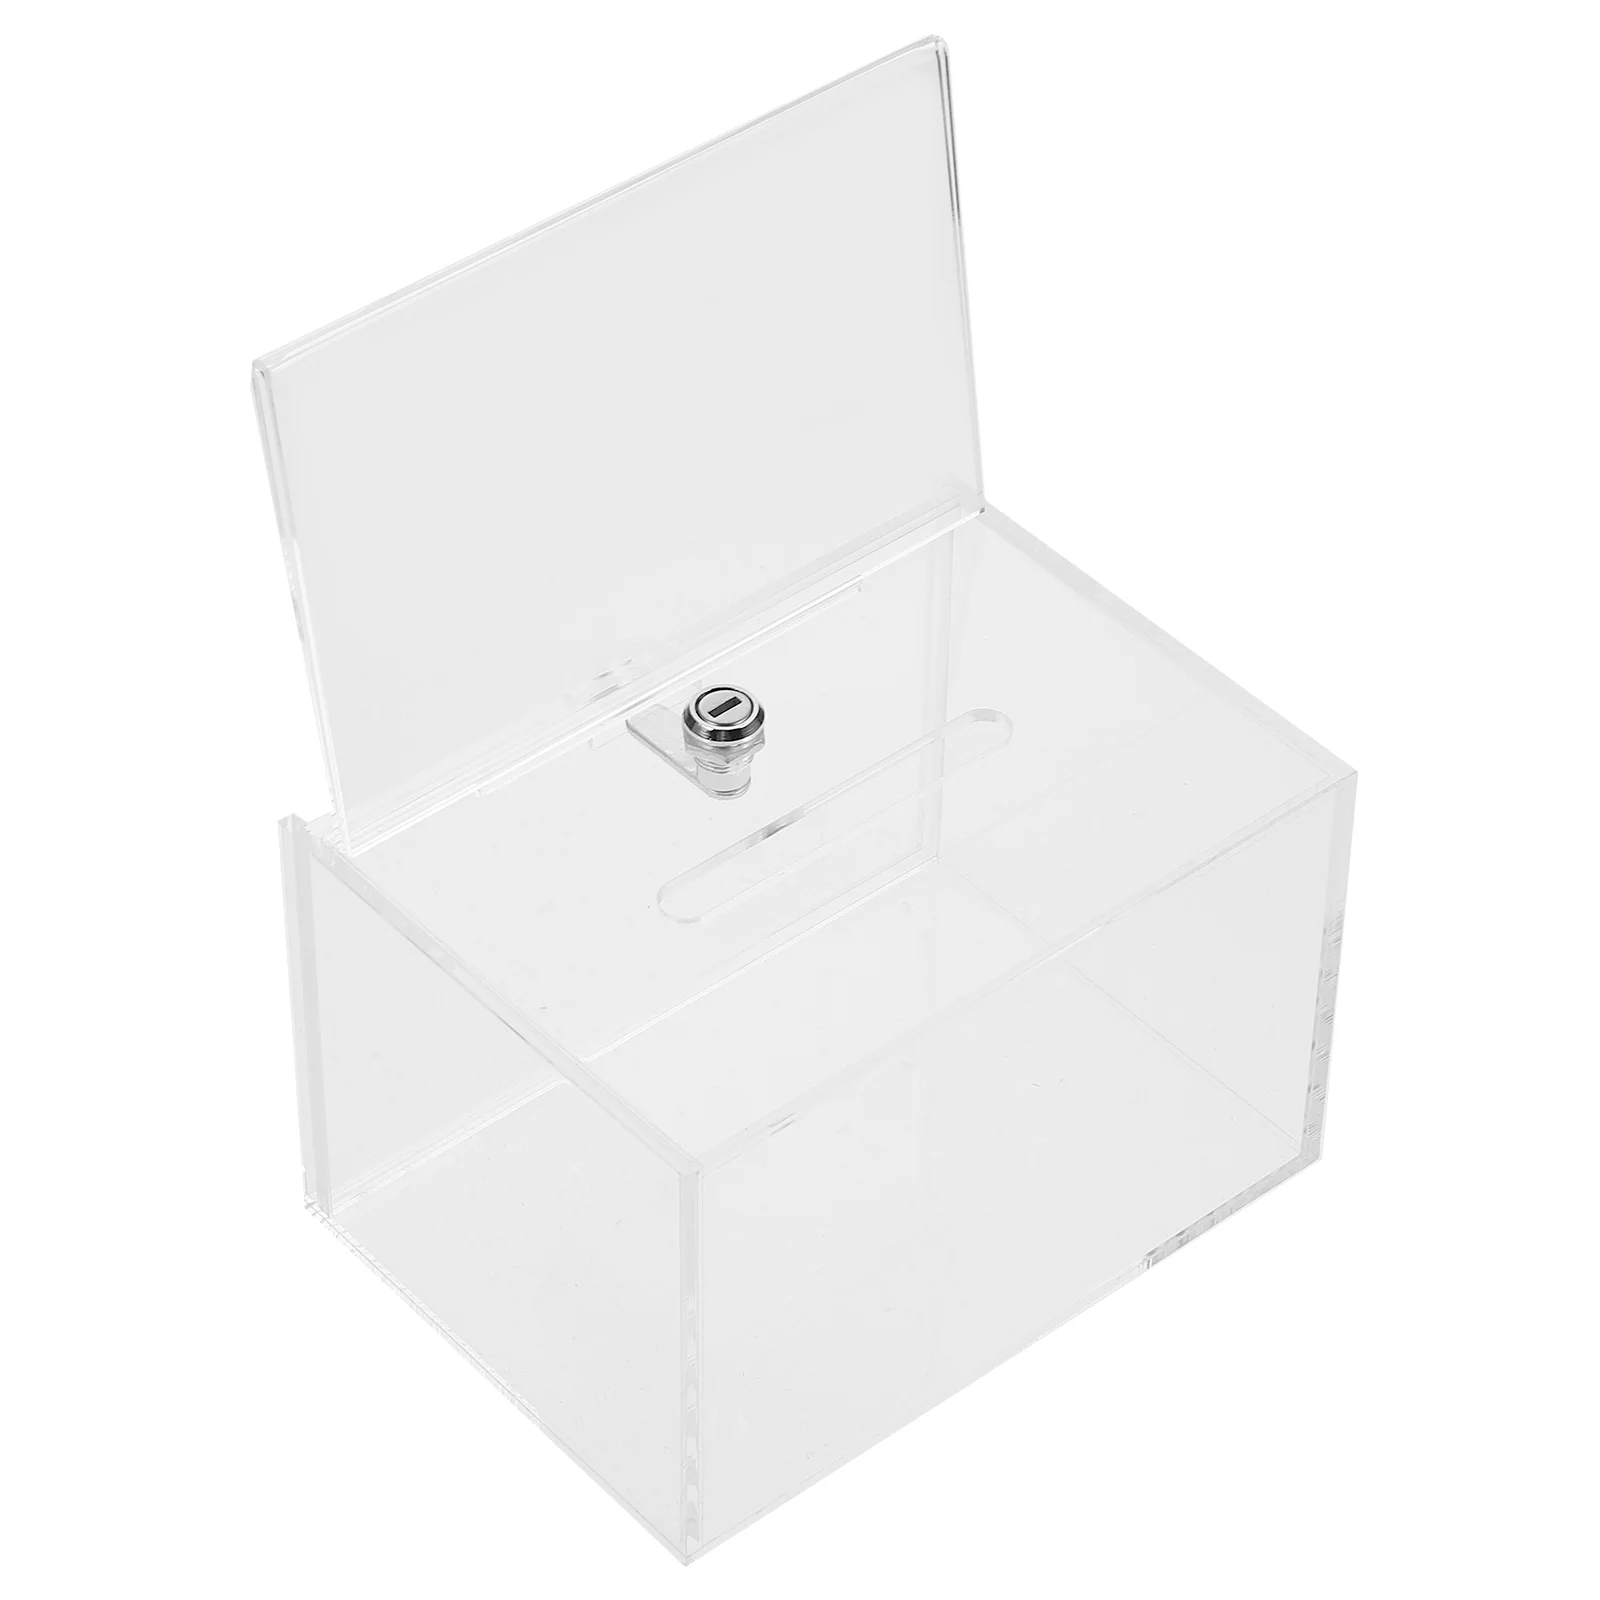 Acrylic Donation Box Transparent Ballot Box Clear Suggestion Box Donation Box for Fundraising